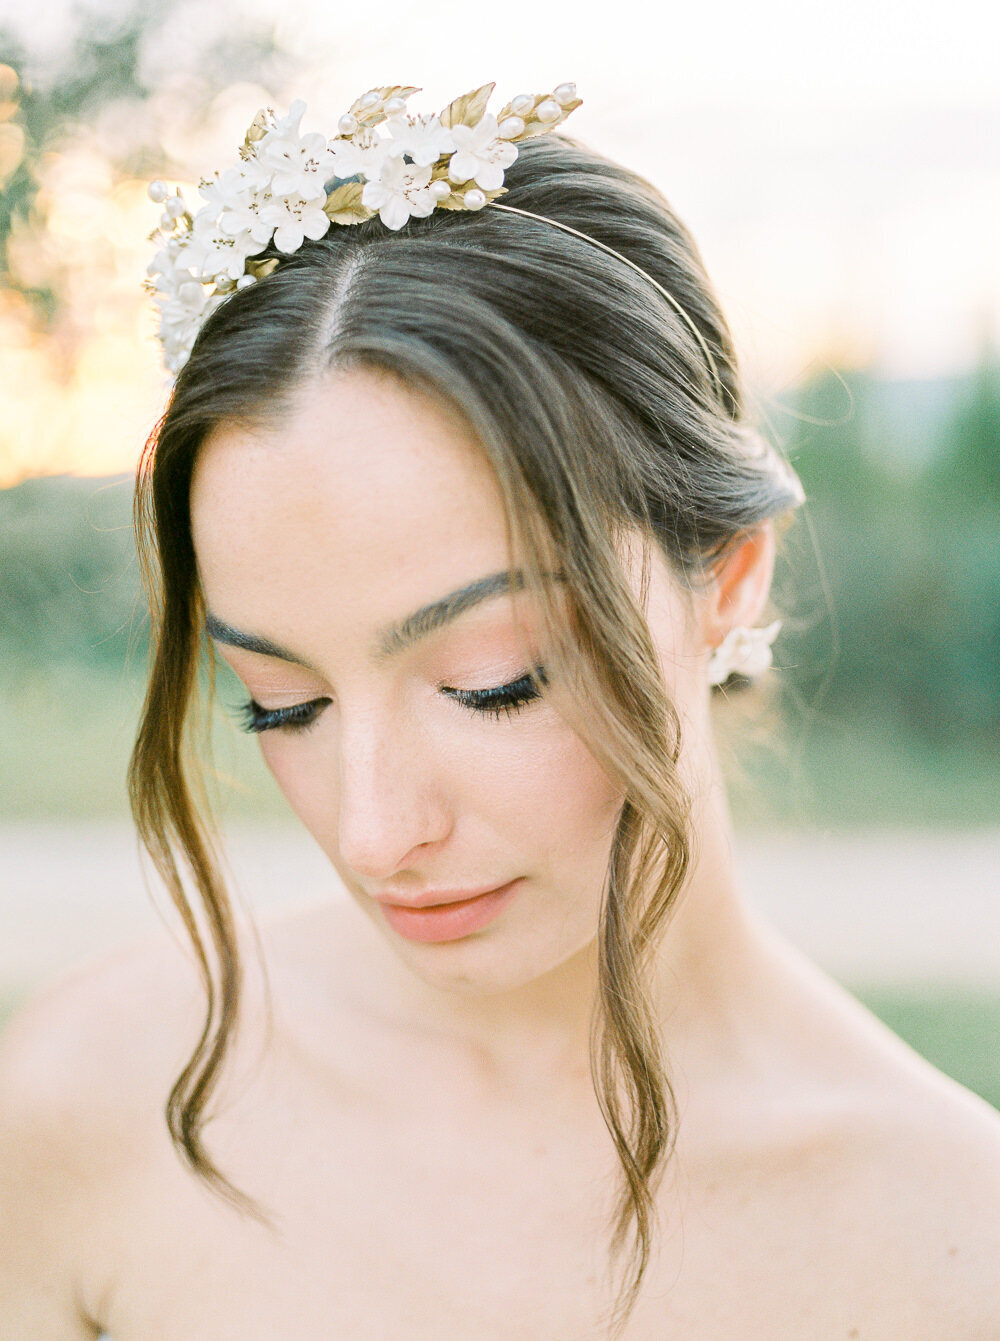 Stunning bridal Portrait - La provence wedding photographer - Juno Photo